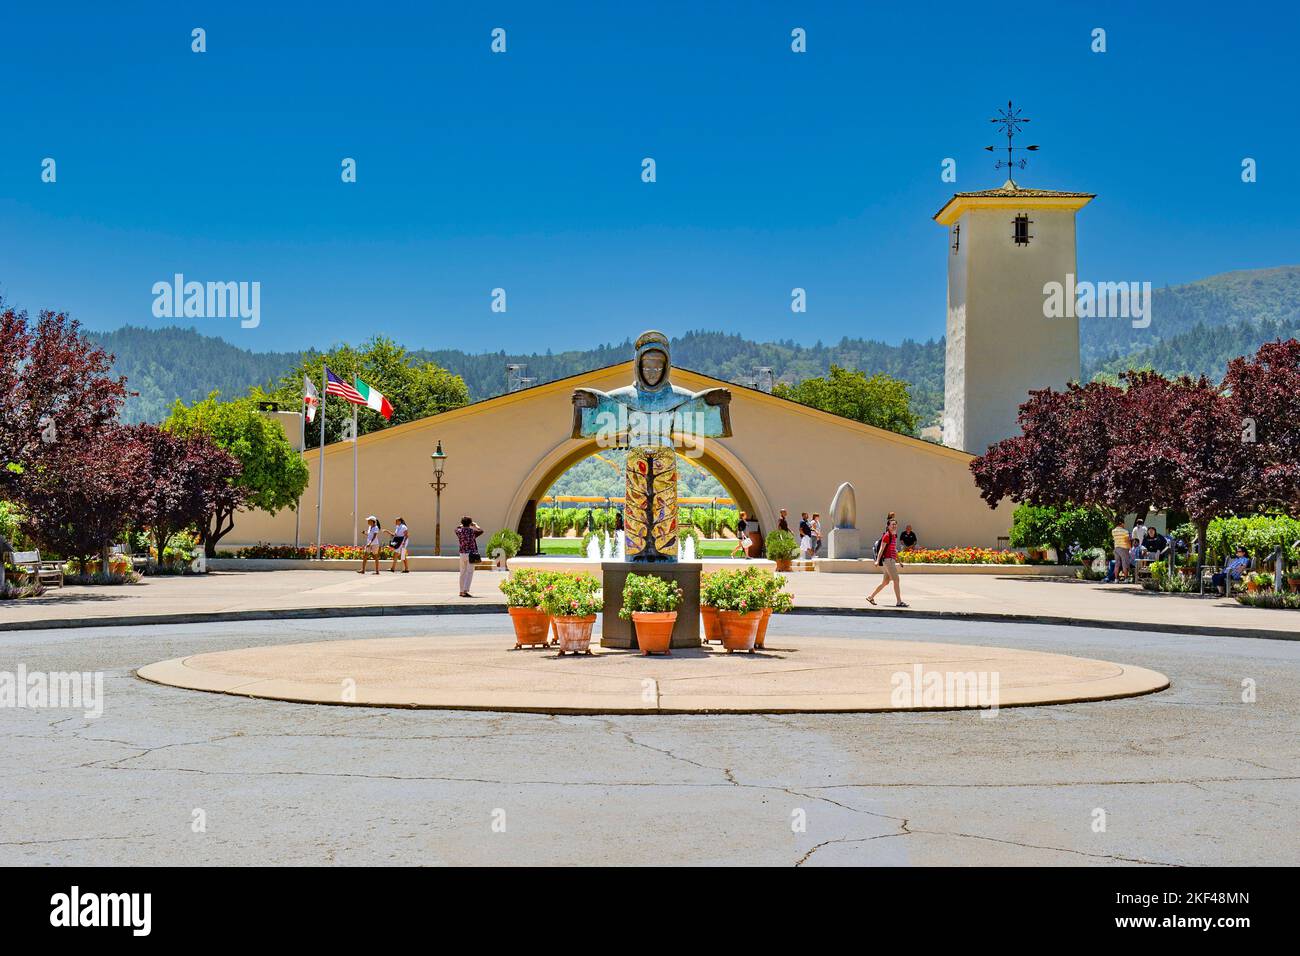 Eingangsbereich der Robert Mondavi Winery, Napa Valley, Kalifornien, USA, Nordamerika Stock Photo